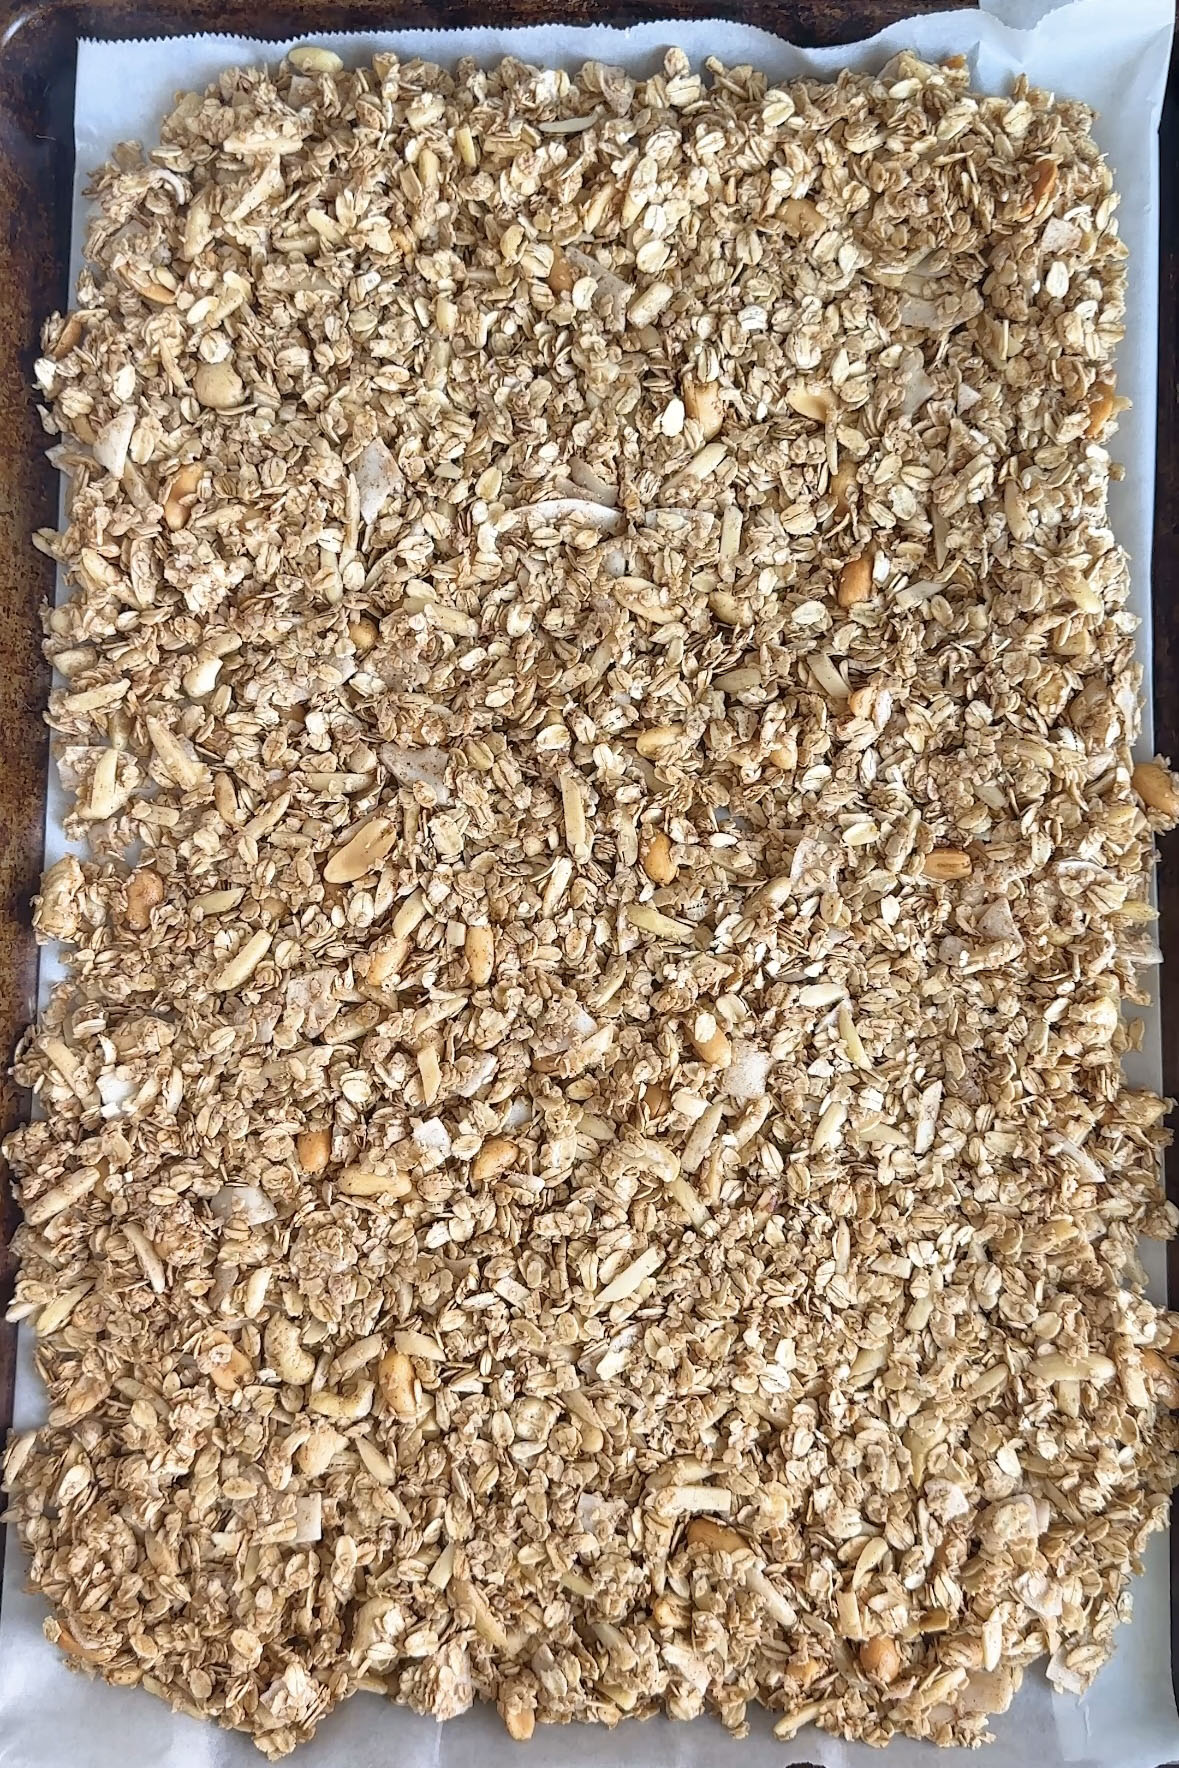 Unbaked granola on a baking sheet.